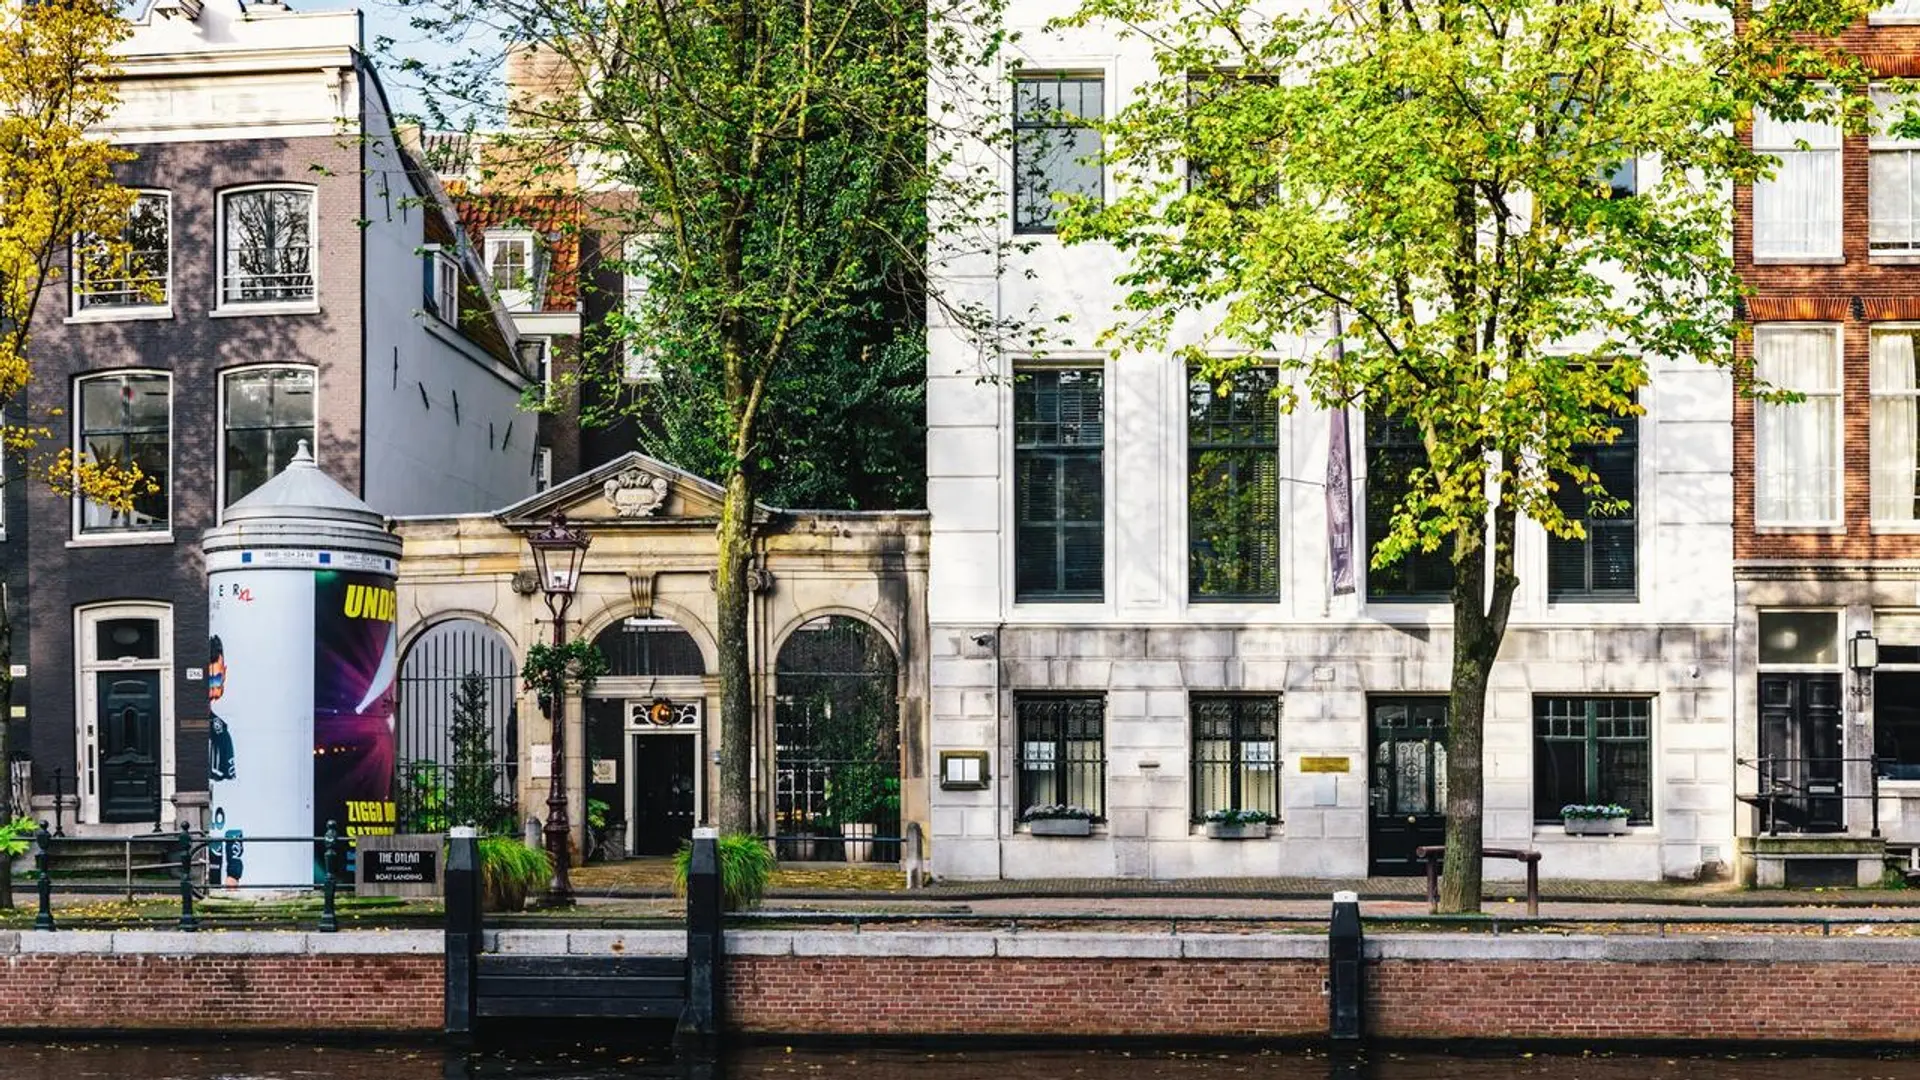 Hotels Toplists - 10 Best Luxury Hotels in Amsterdam